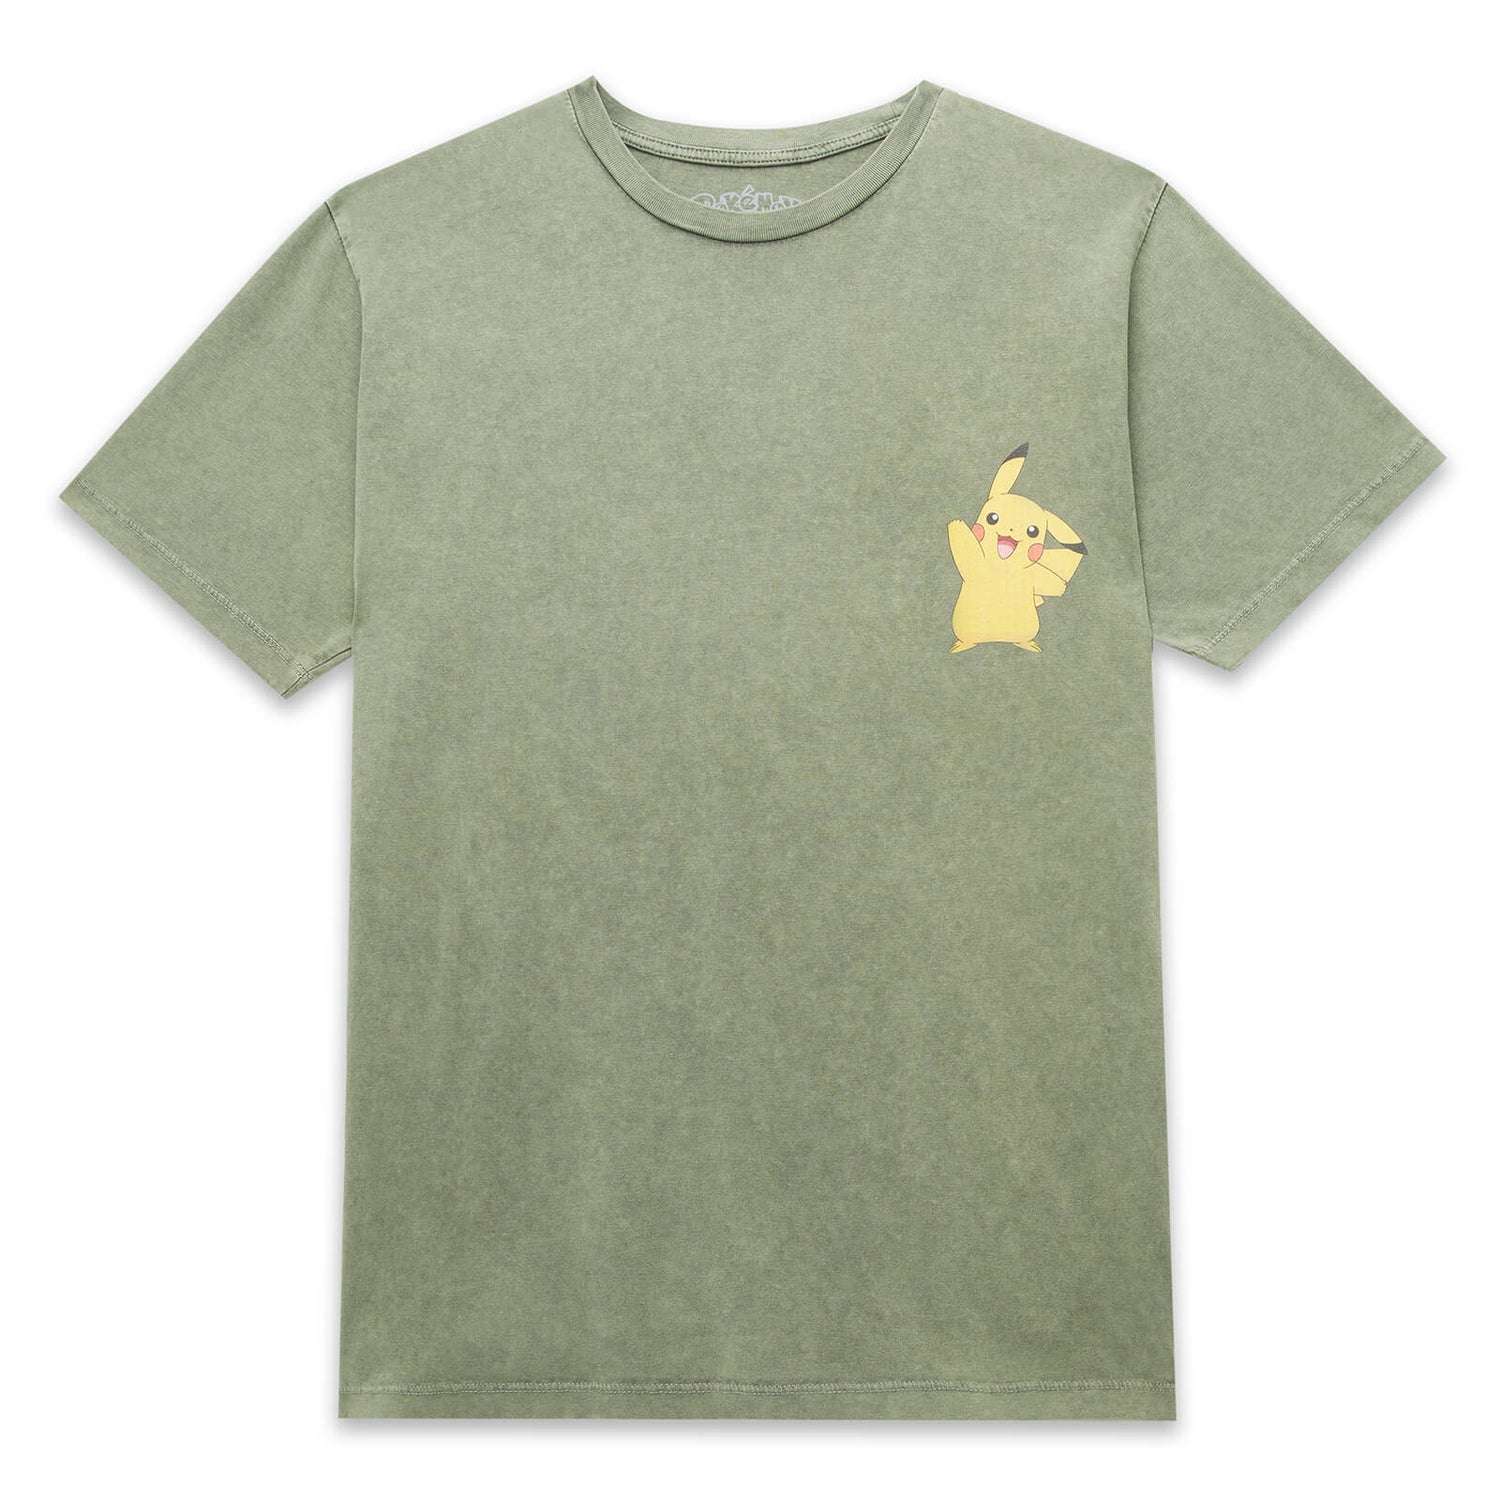 Pokémon Pikachu Unisex T-Shirt - Khaki Acid Wash